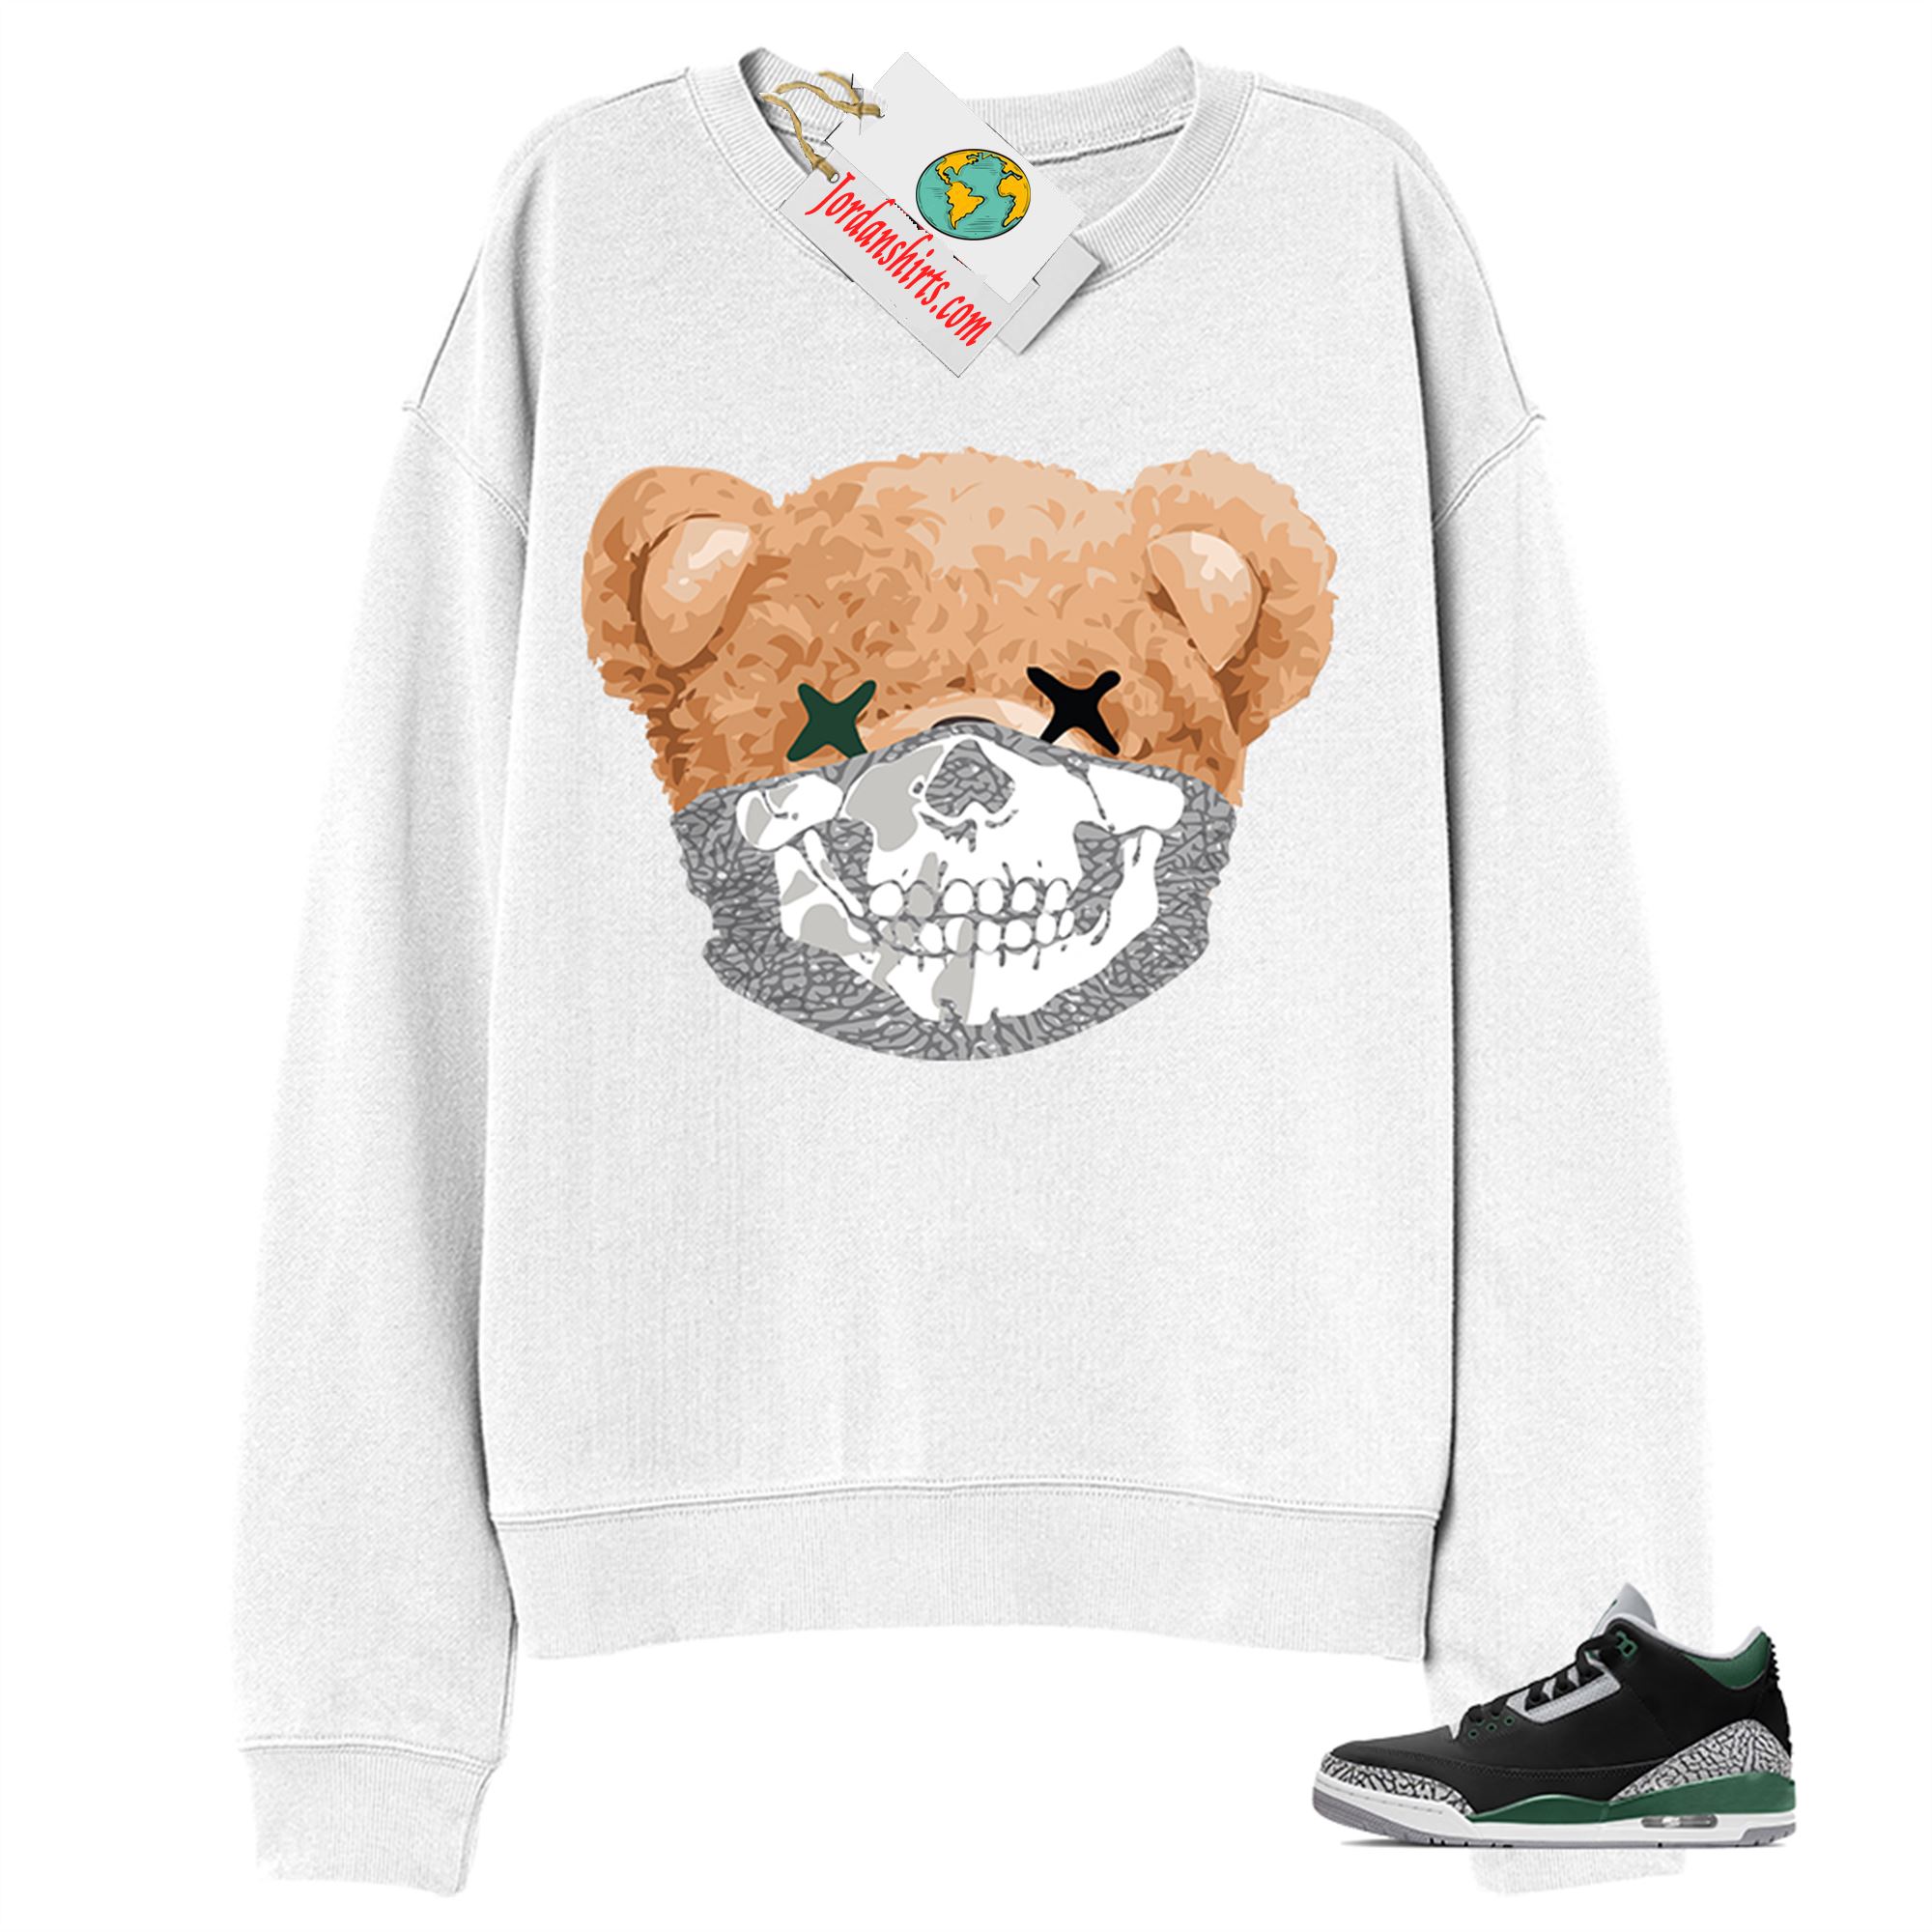 Jordan 3 Sweatshirt, Teddy Bear Skull Bandana White Sweatshirt Air Jordan 3 Pine Green 3s Full Size Up To 5xl